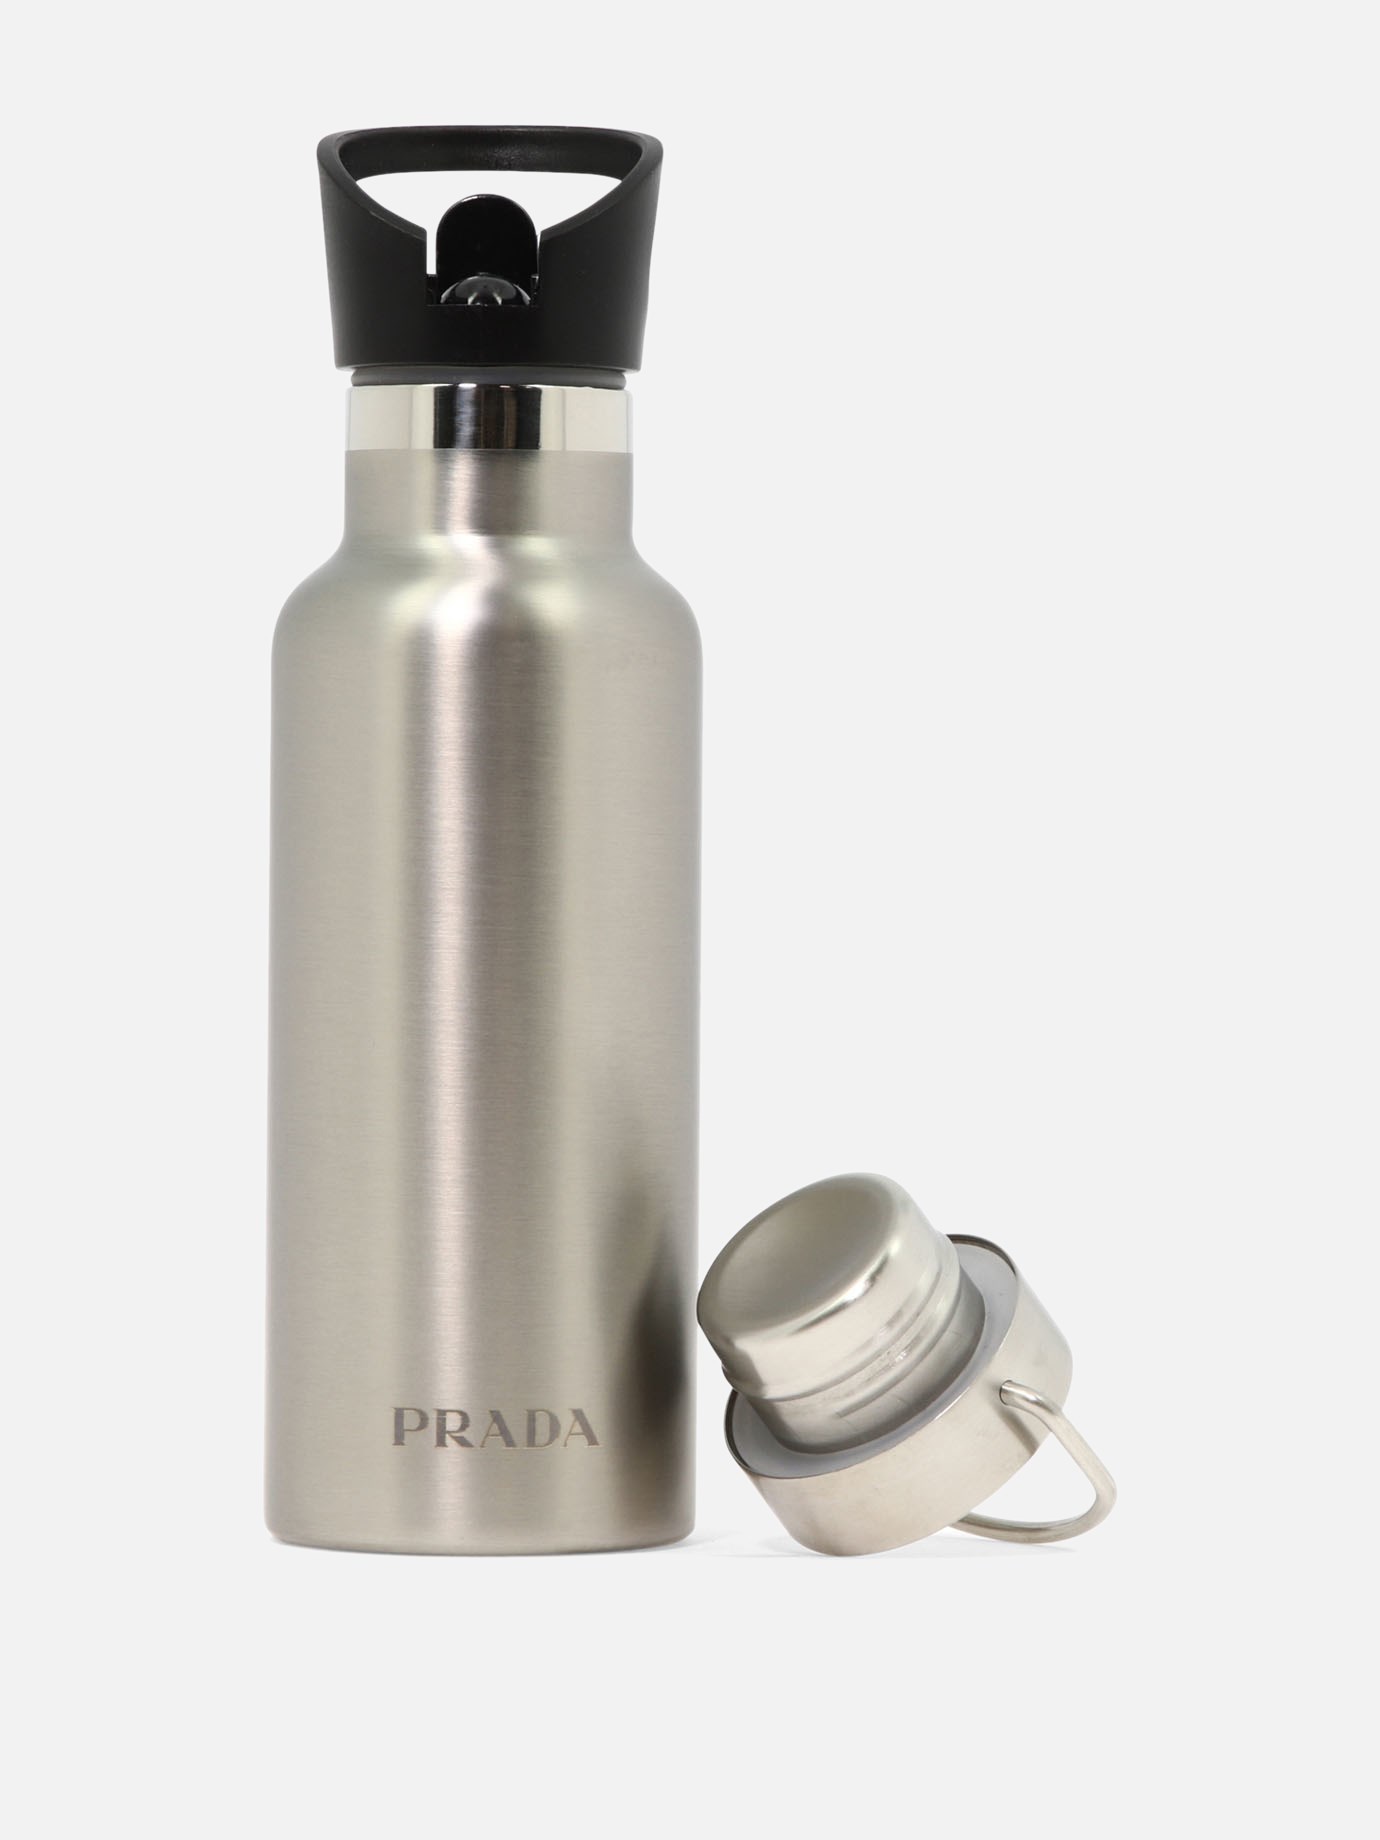 Stainless steel bottle by Prada